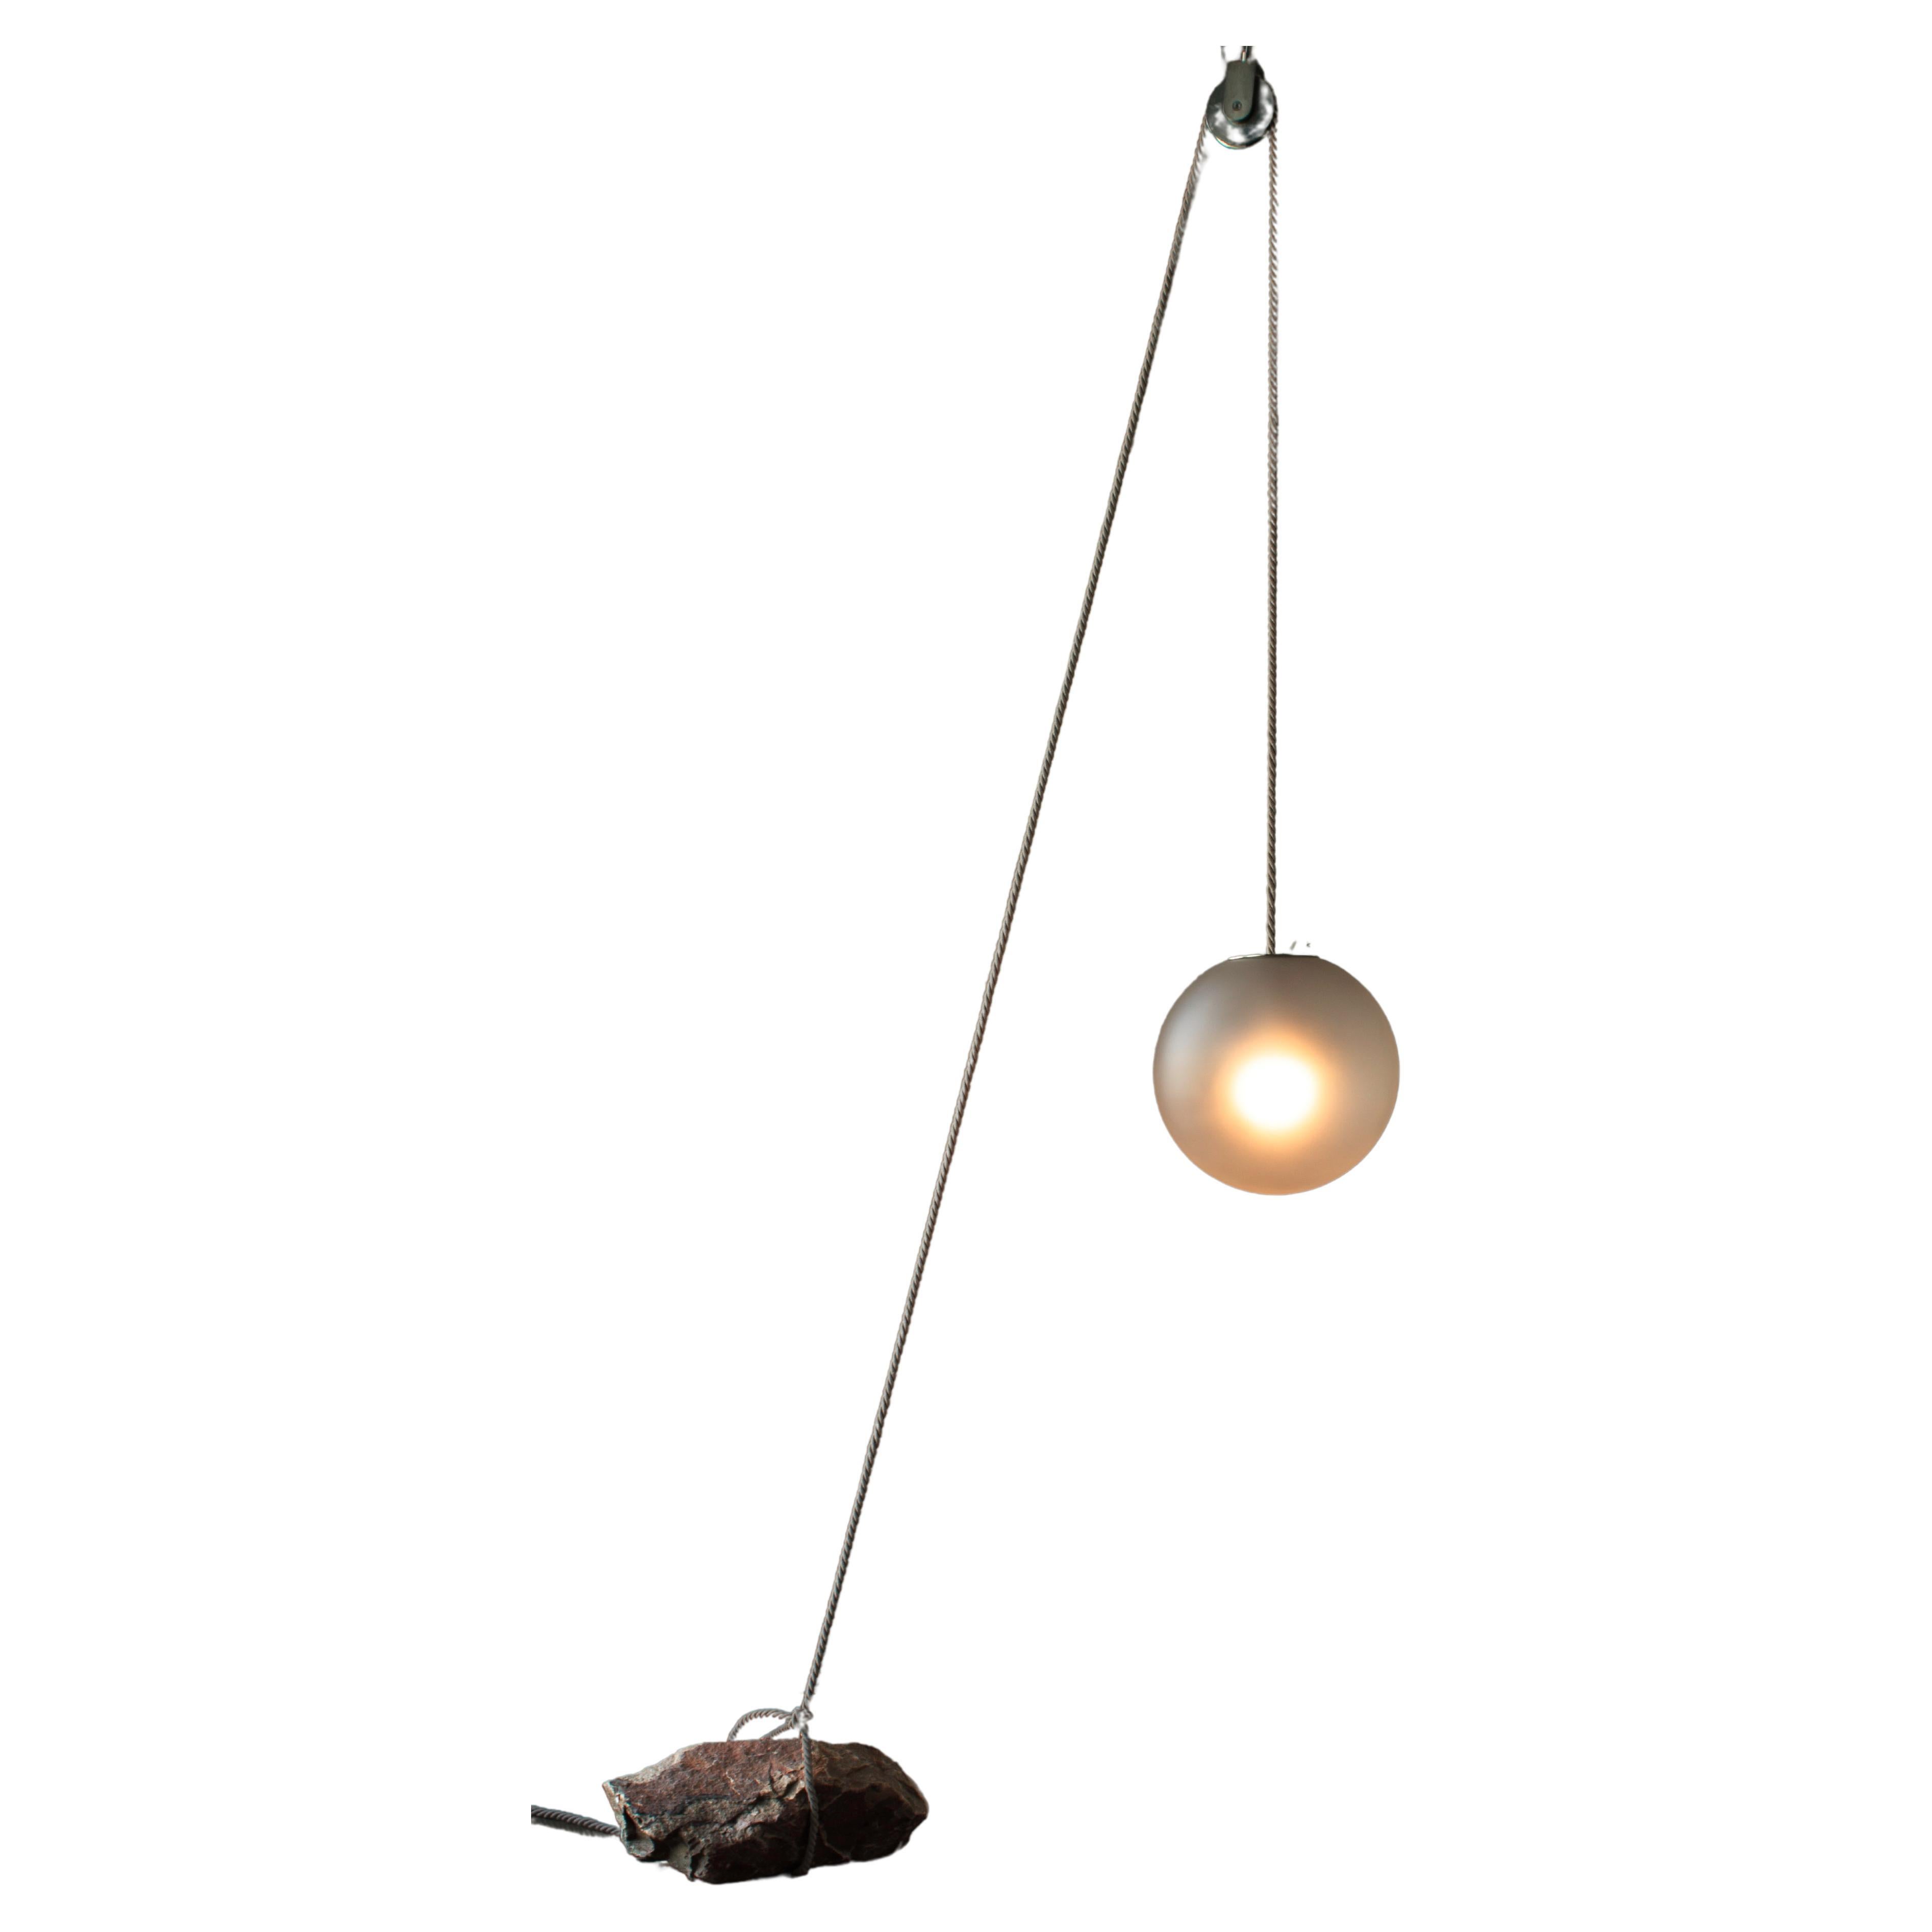 Dutch Beacon of Light D40 Glass Ball Sculptural Natural Stone Pendant Floor Lamp For Sale